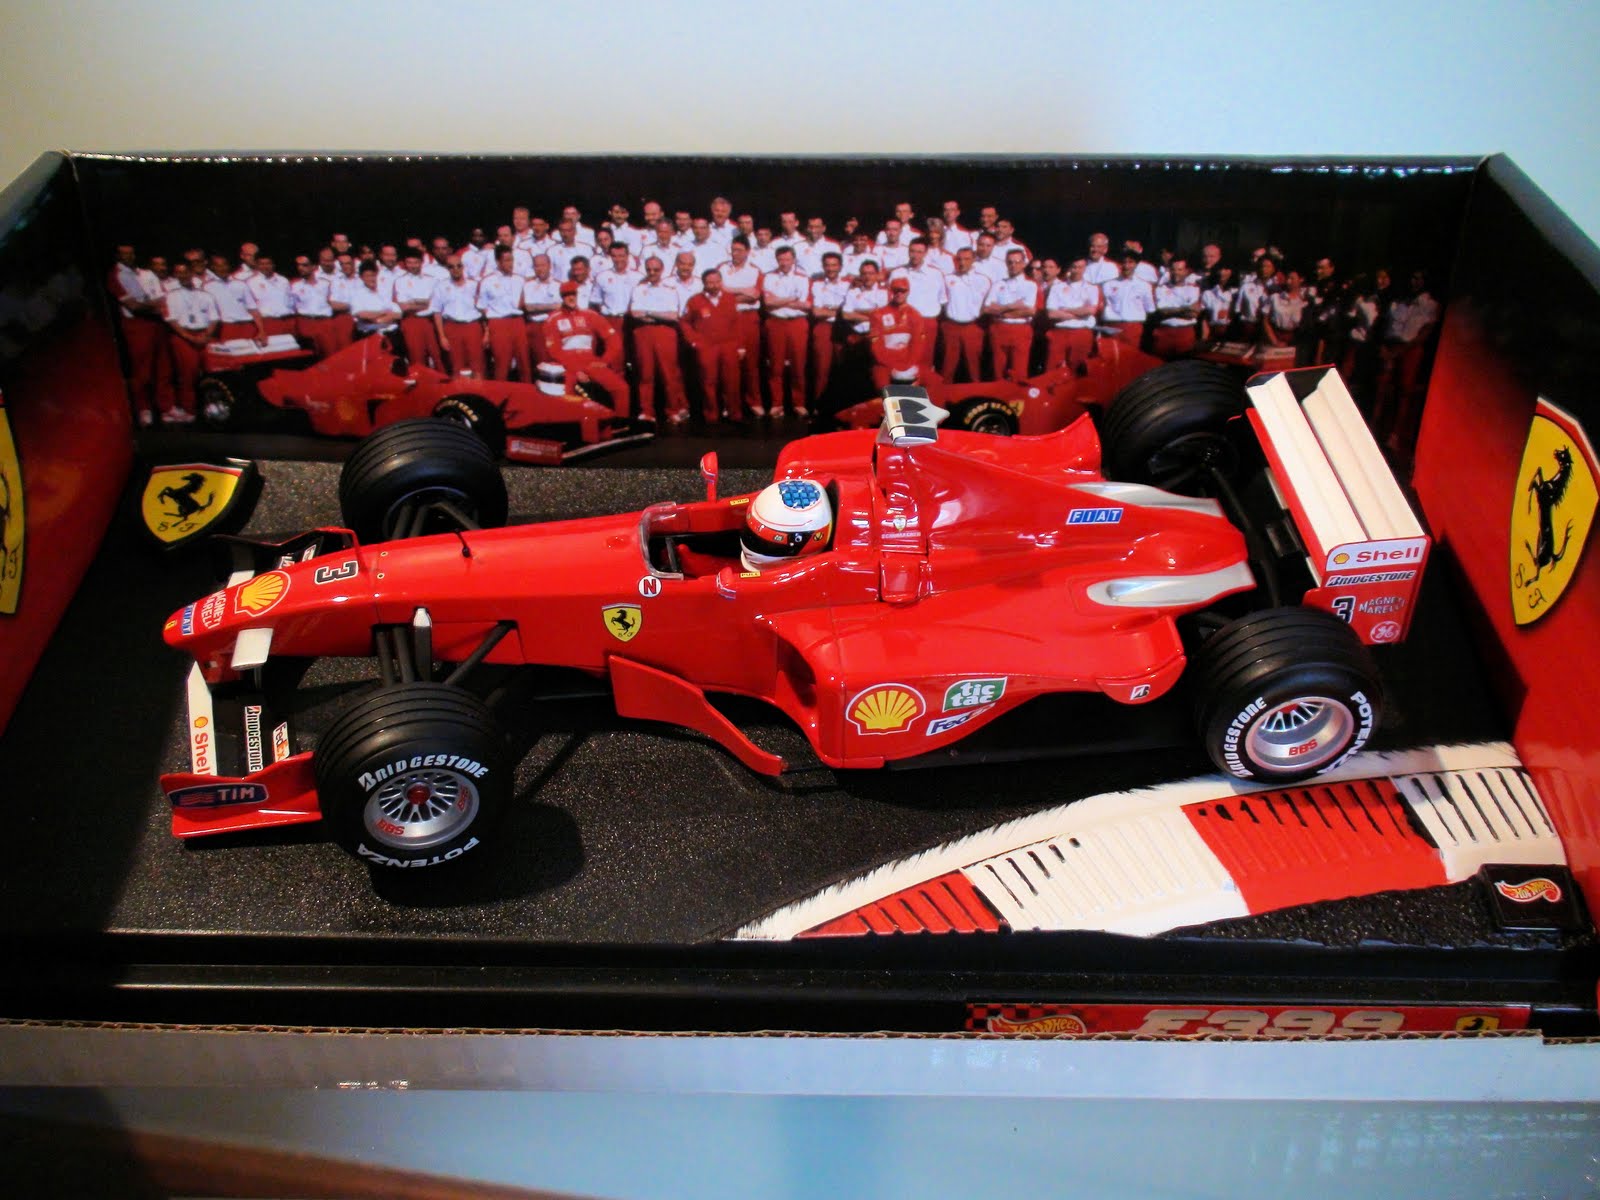 Hot Wheels Ferrari F399 1999 Monaco GP 1st Michael Schumacher Very Good Boxed for sale online